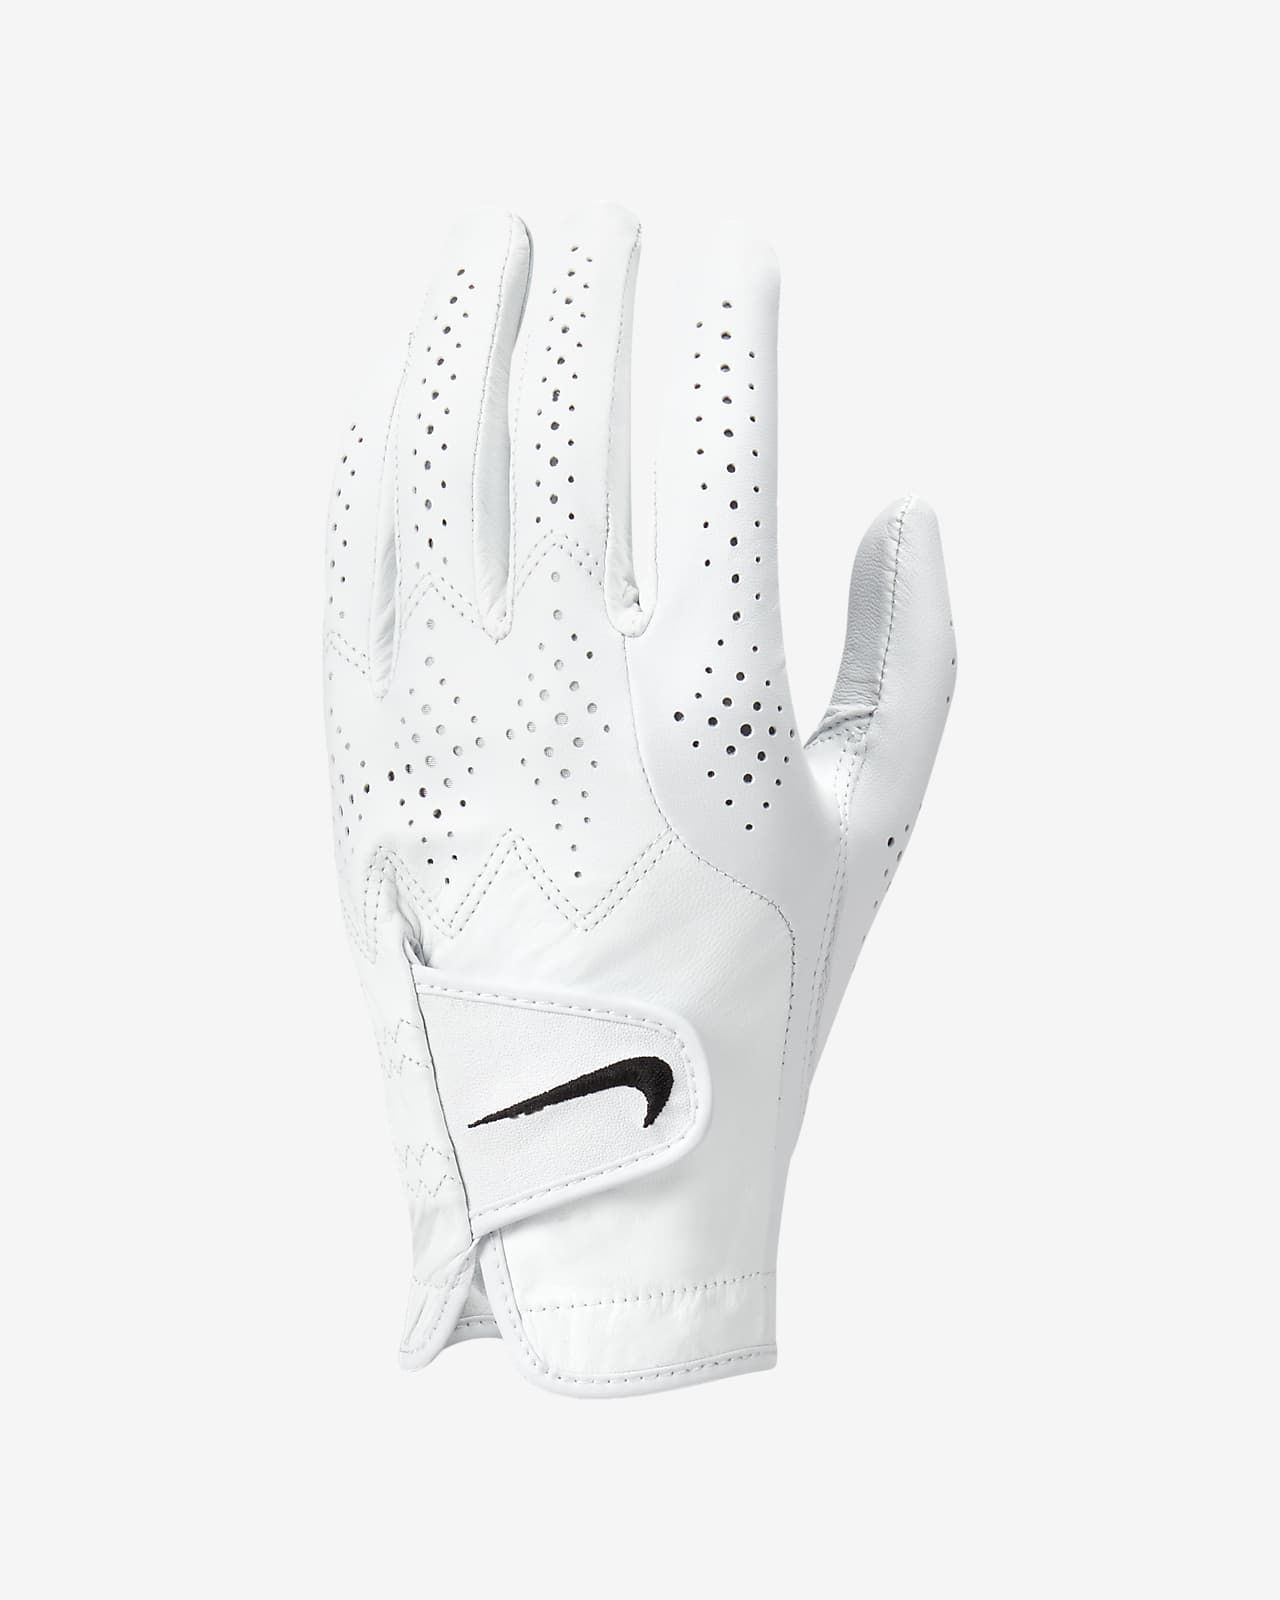 Nike Tour 4 Men's Golf Glove Regular).